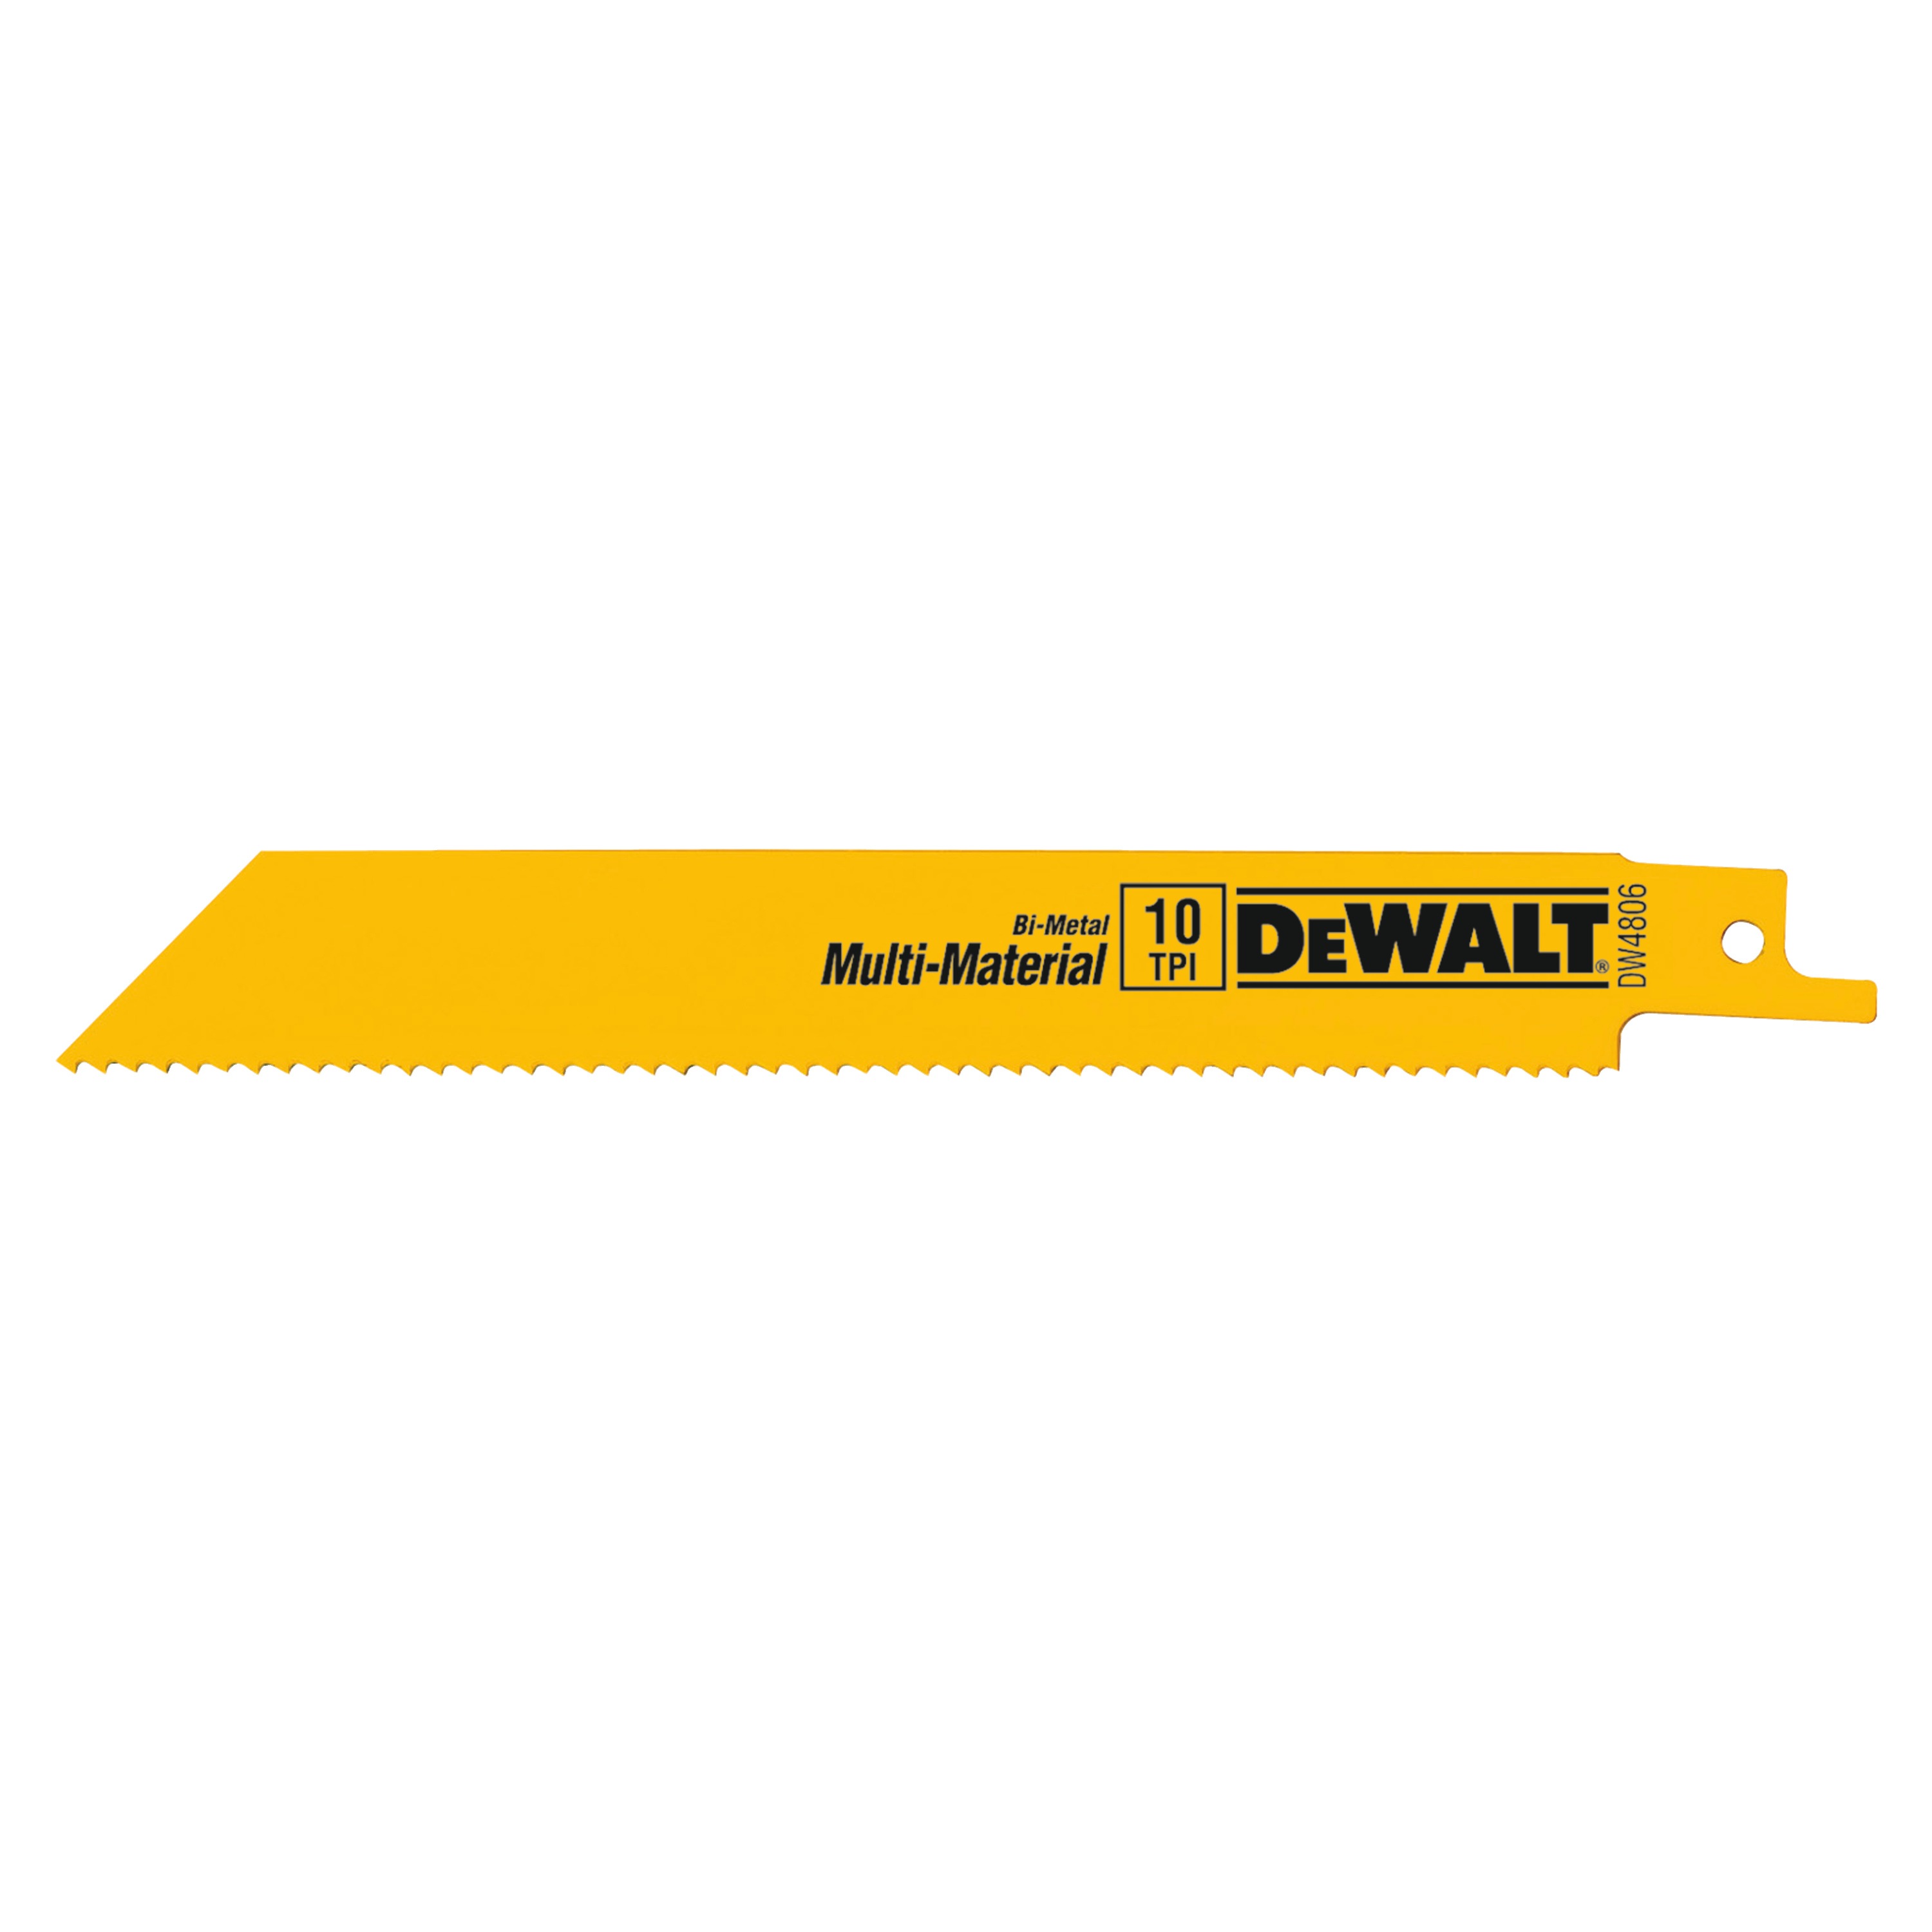 DEWALT - 6 10 TPI Straight Back BiMetal Reciprocating Saw Blade General Purpose 2 pack - DW4806-2